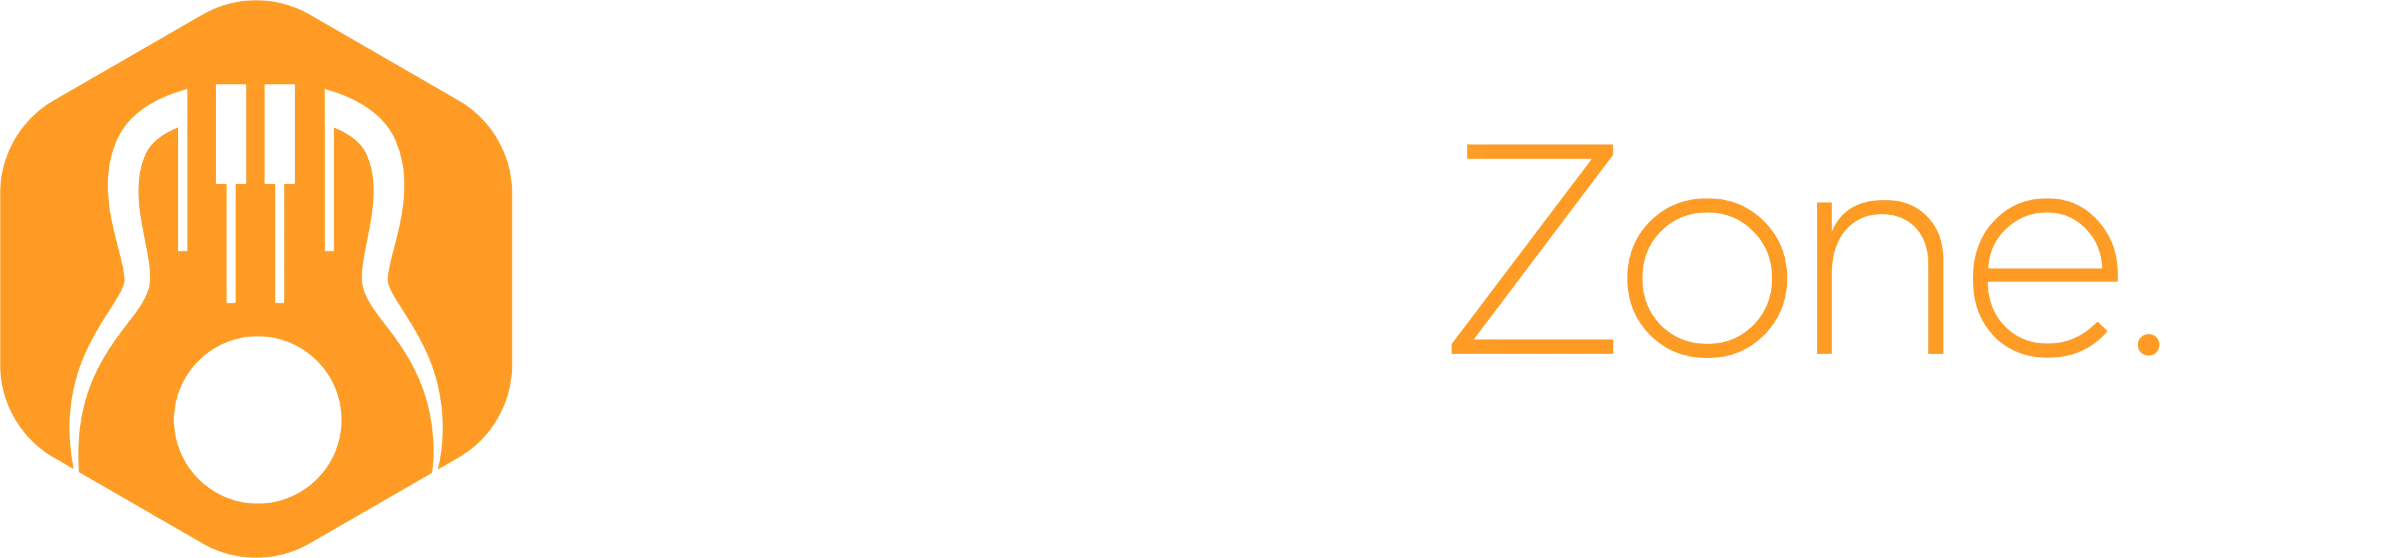 www.chordzone.org